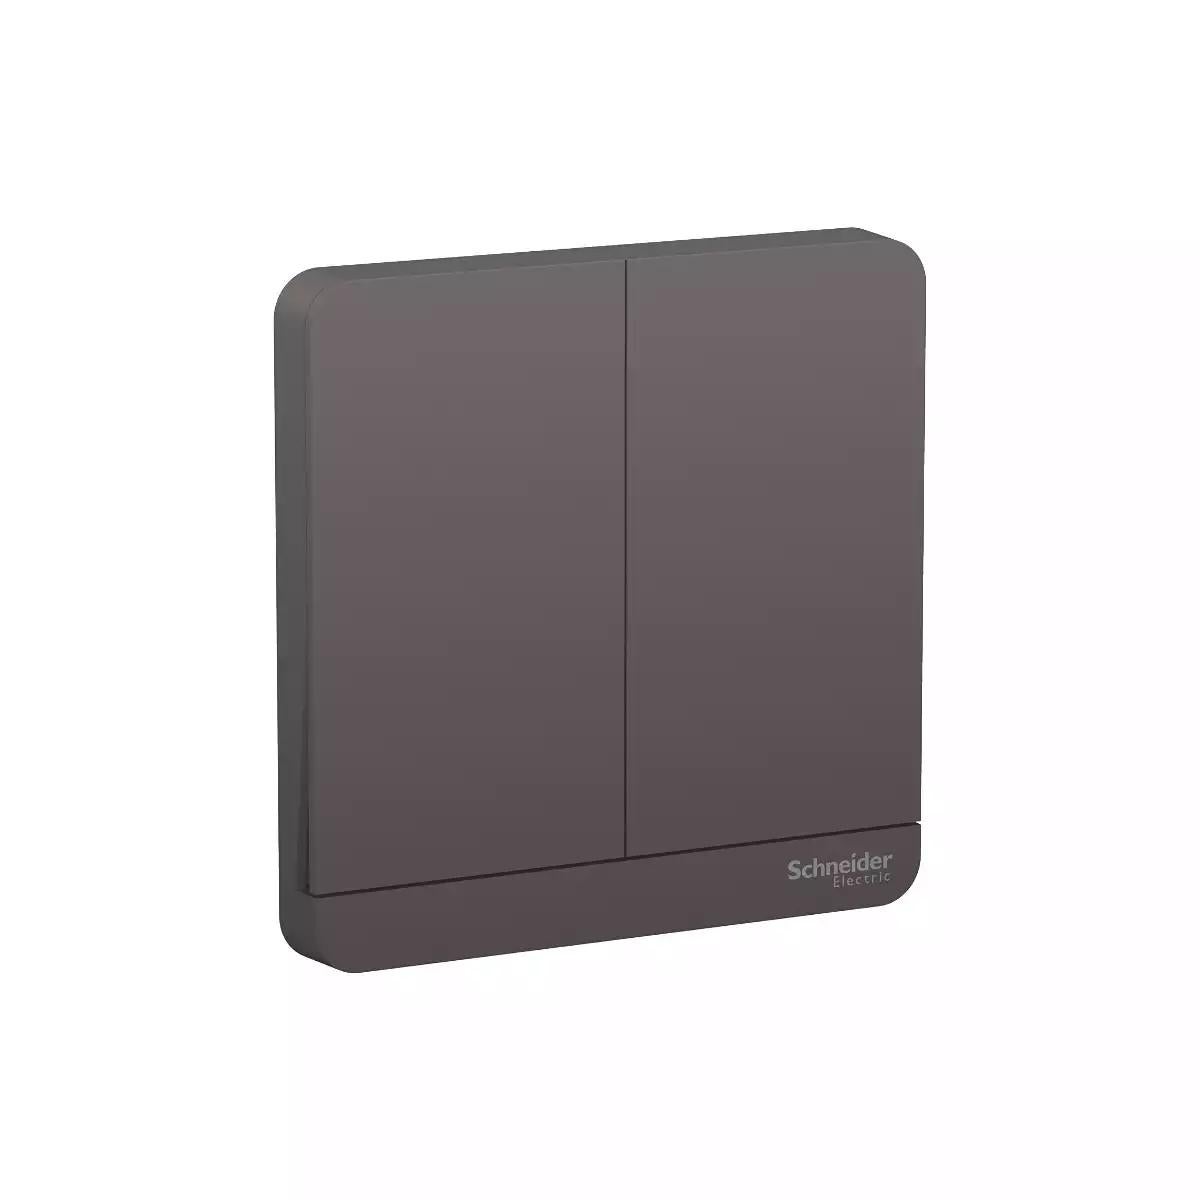 AvatarOn, cover plate for switch, 2 rocker, Dark Grey